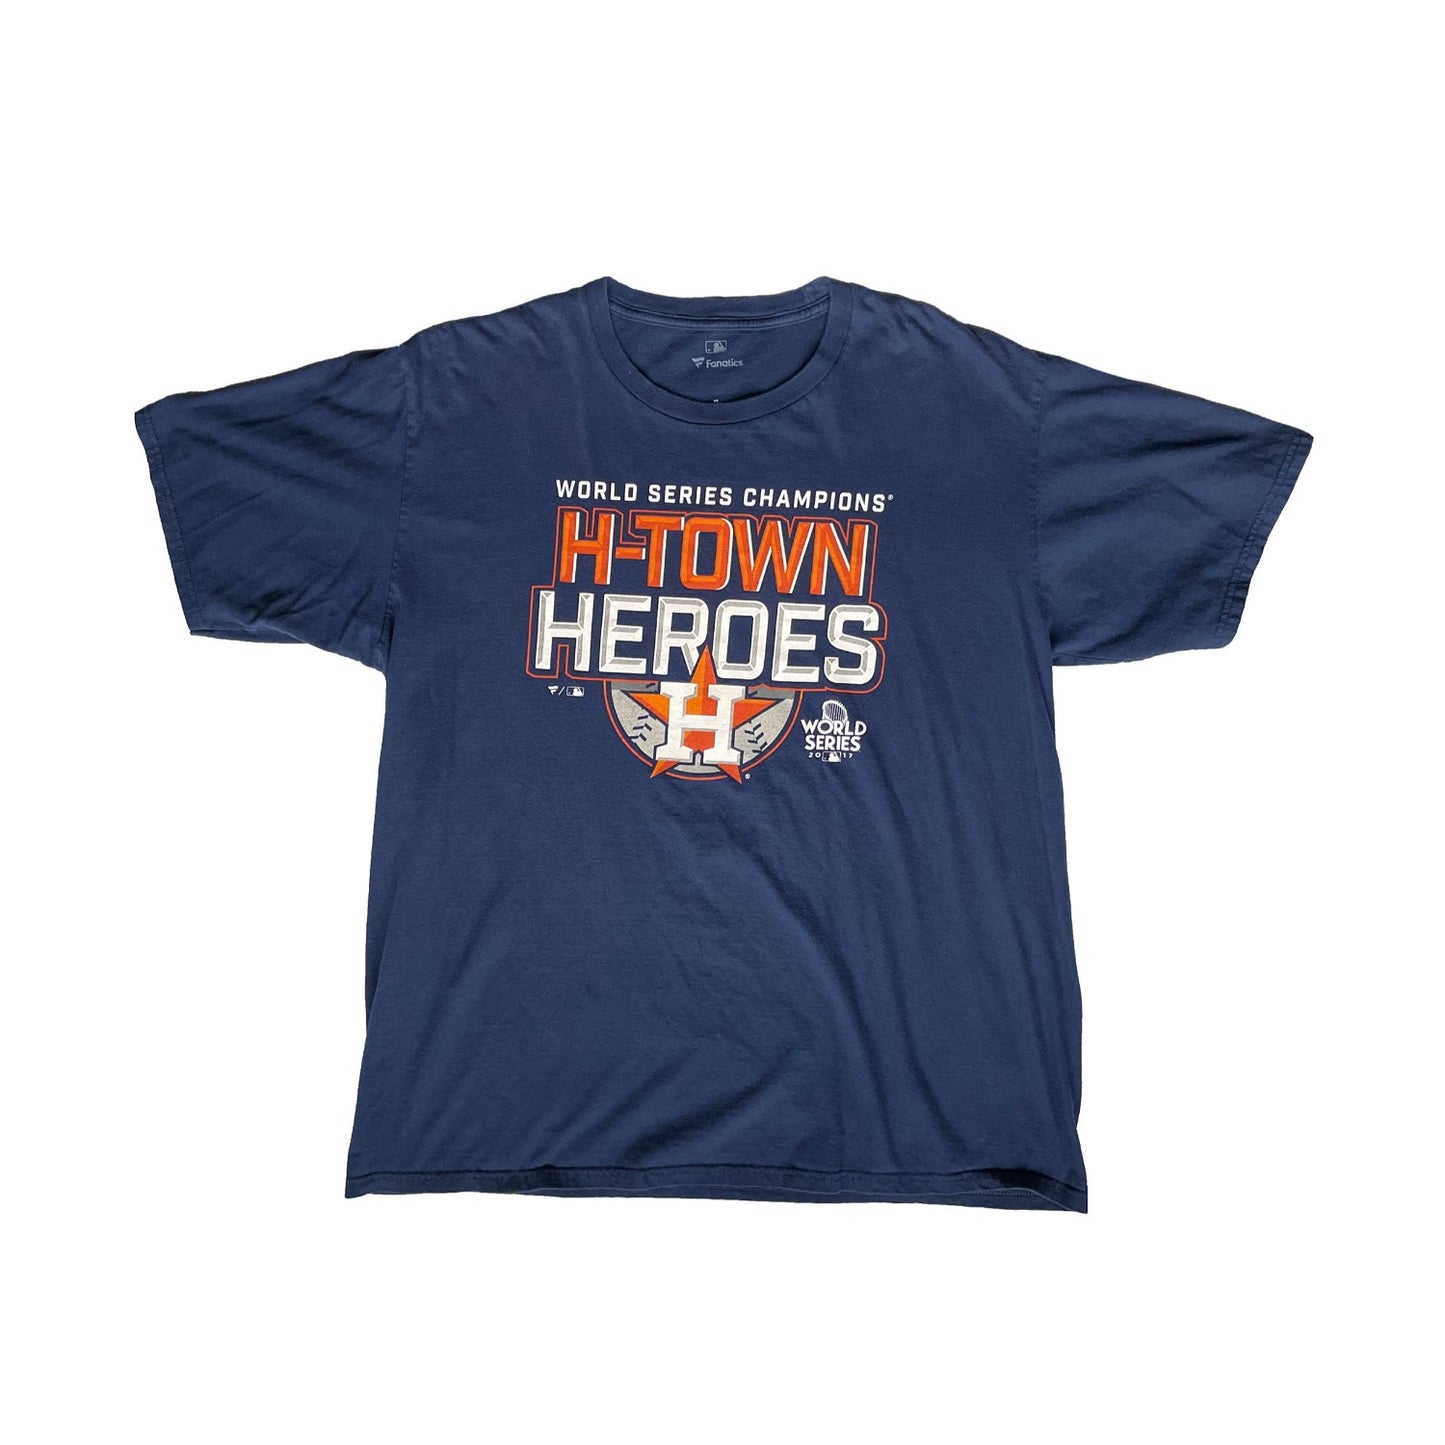 Astros 2017 World Series Champions T-Shirt